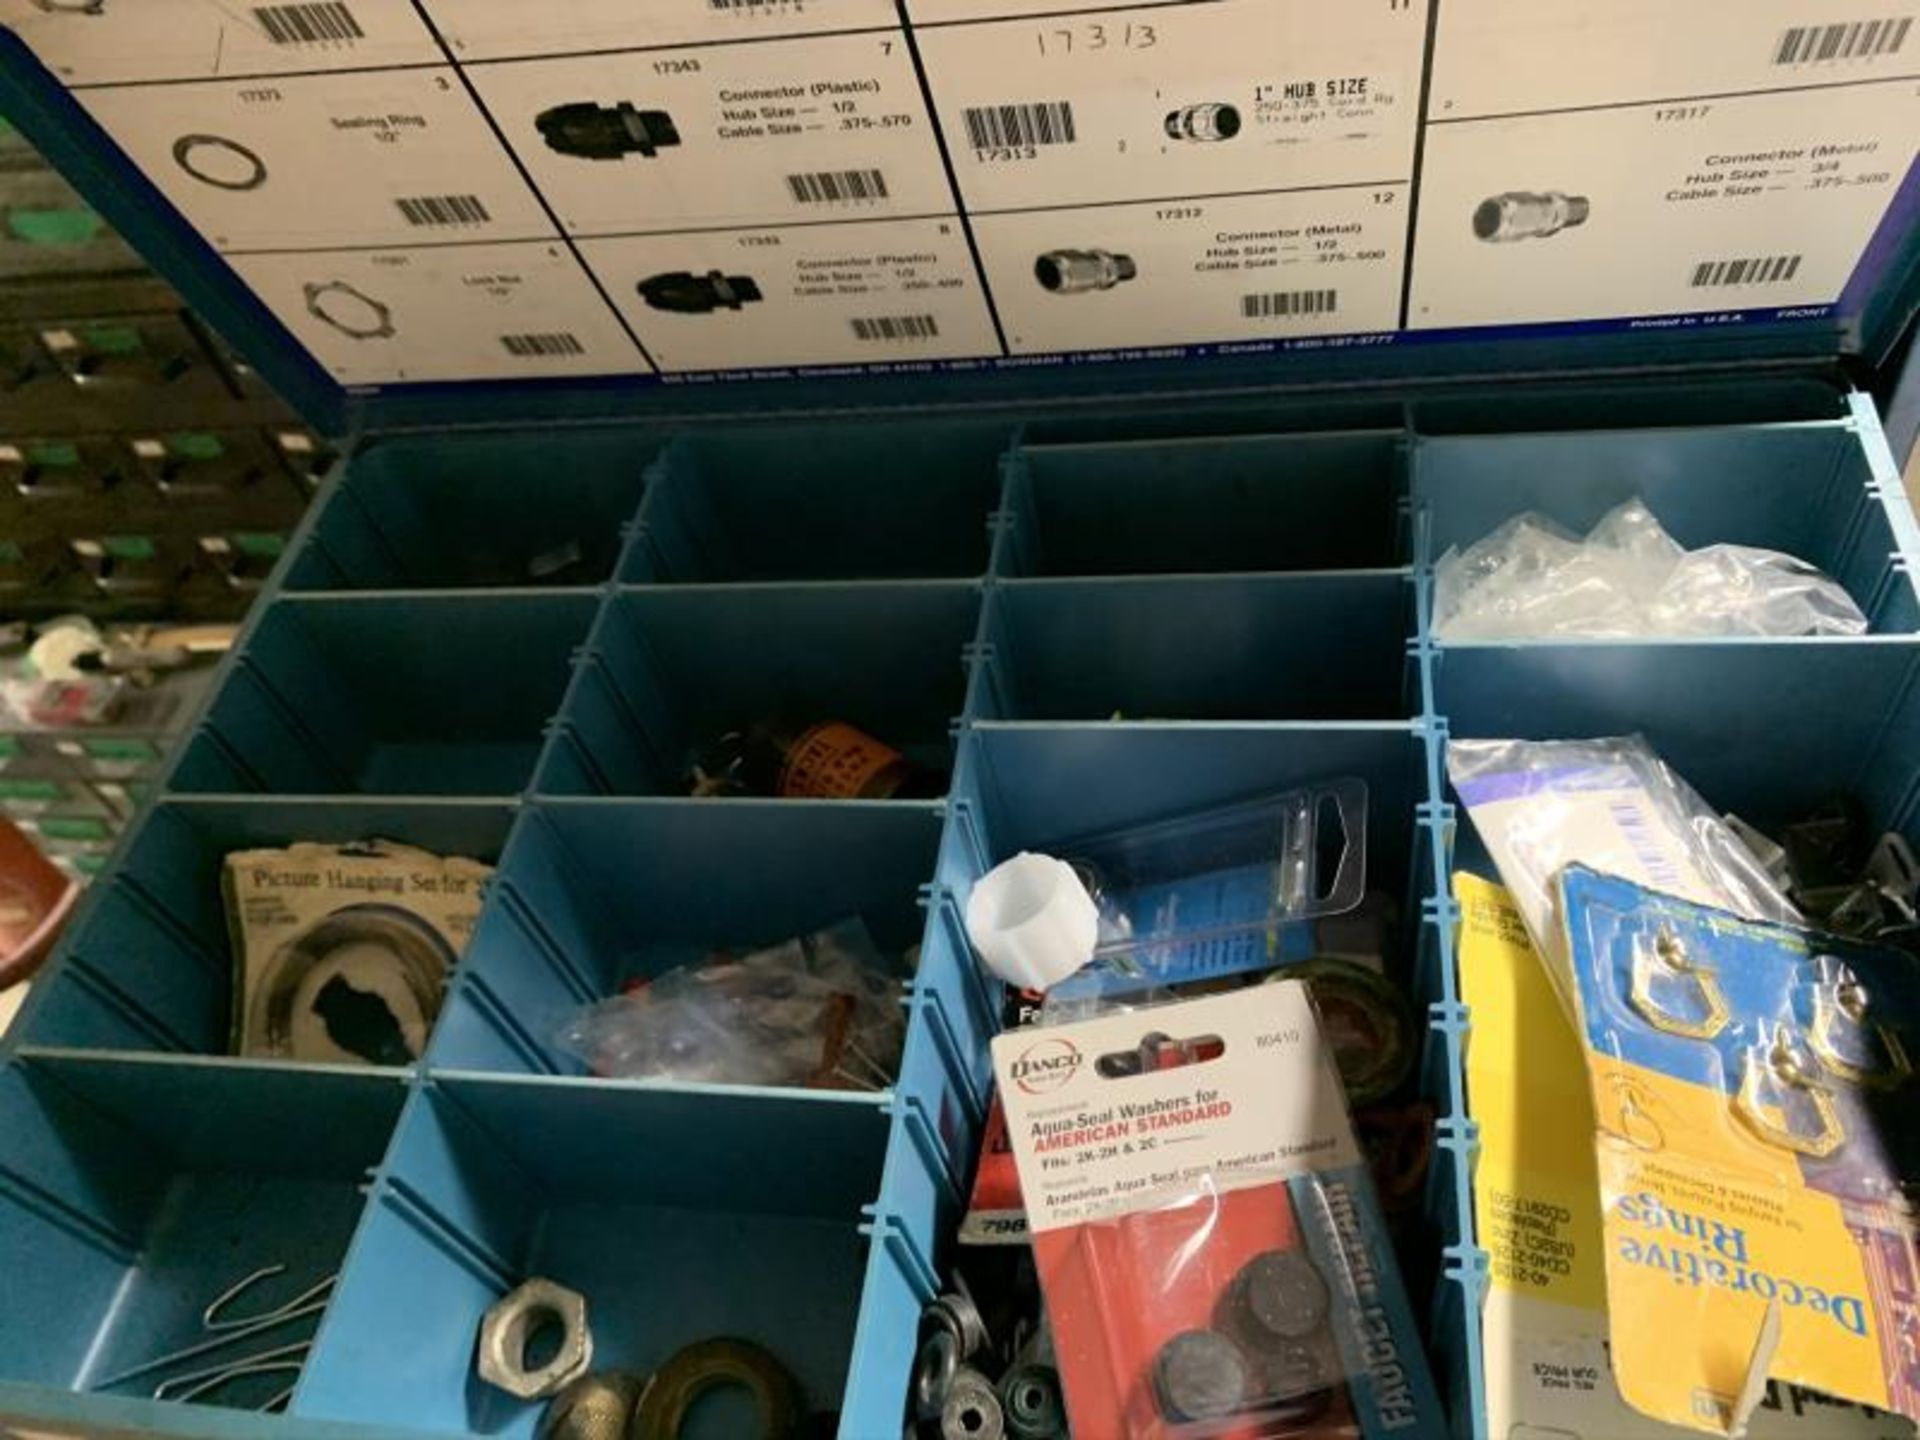 16 Blue Bowman Storage Boxes with Misc hardware, chessmen, sheet metal screws , allen screws,